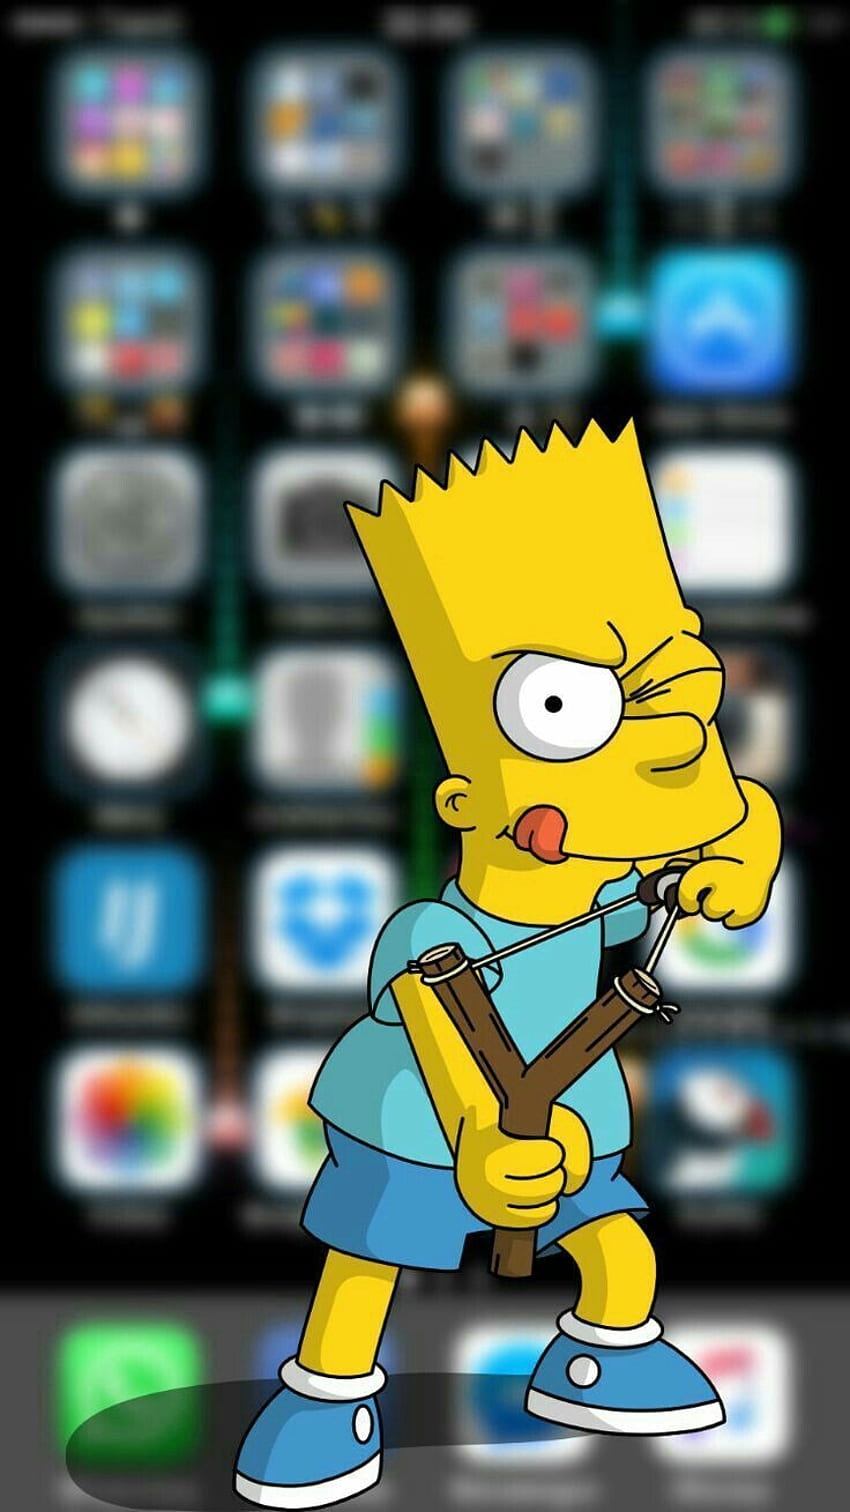 9 Simpson wallpaper iphone ideas